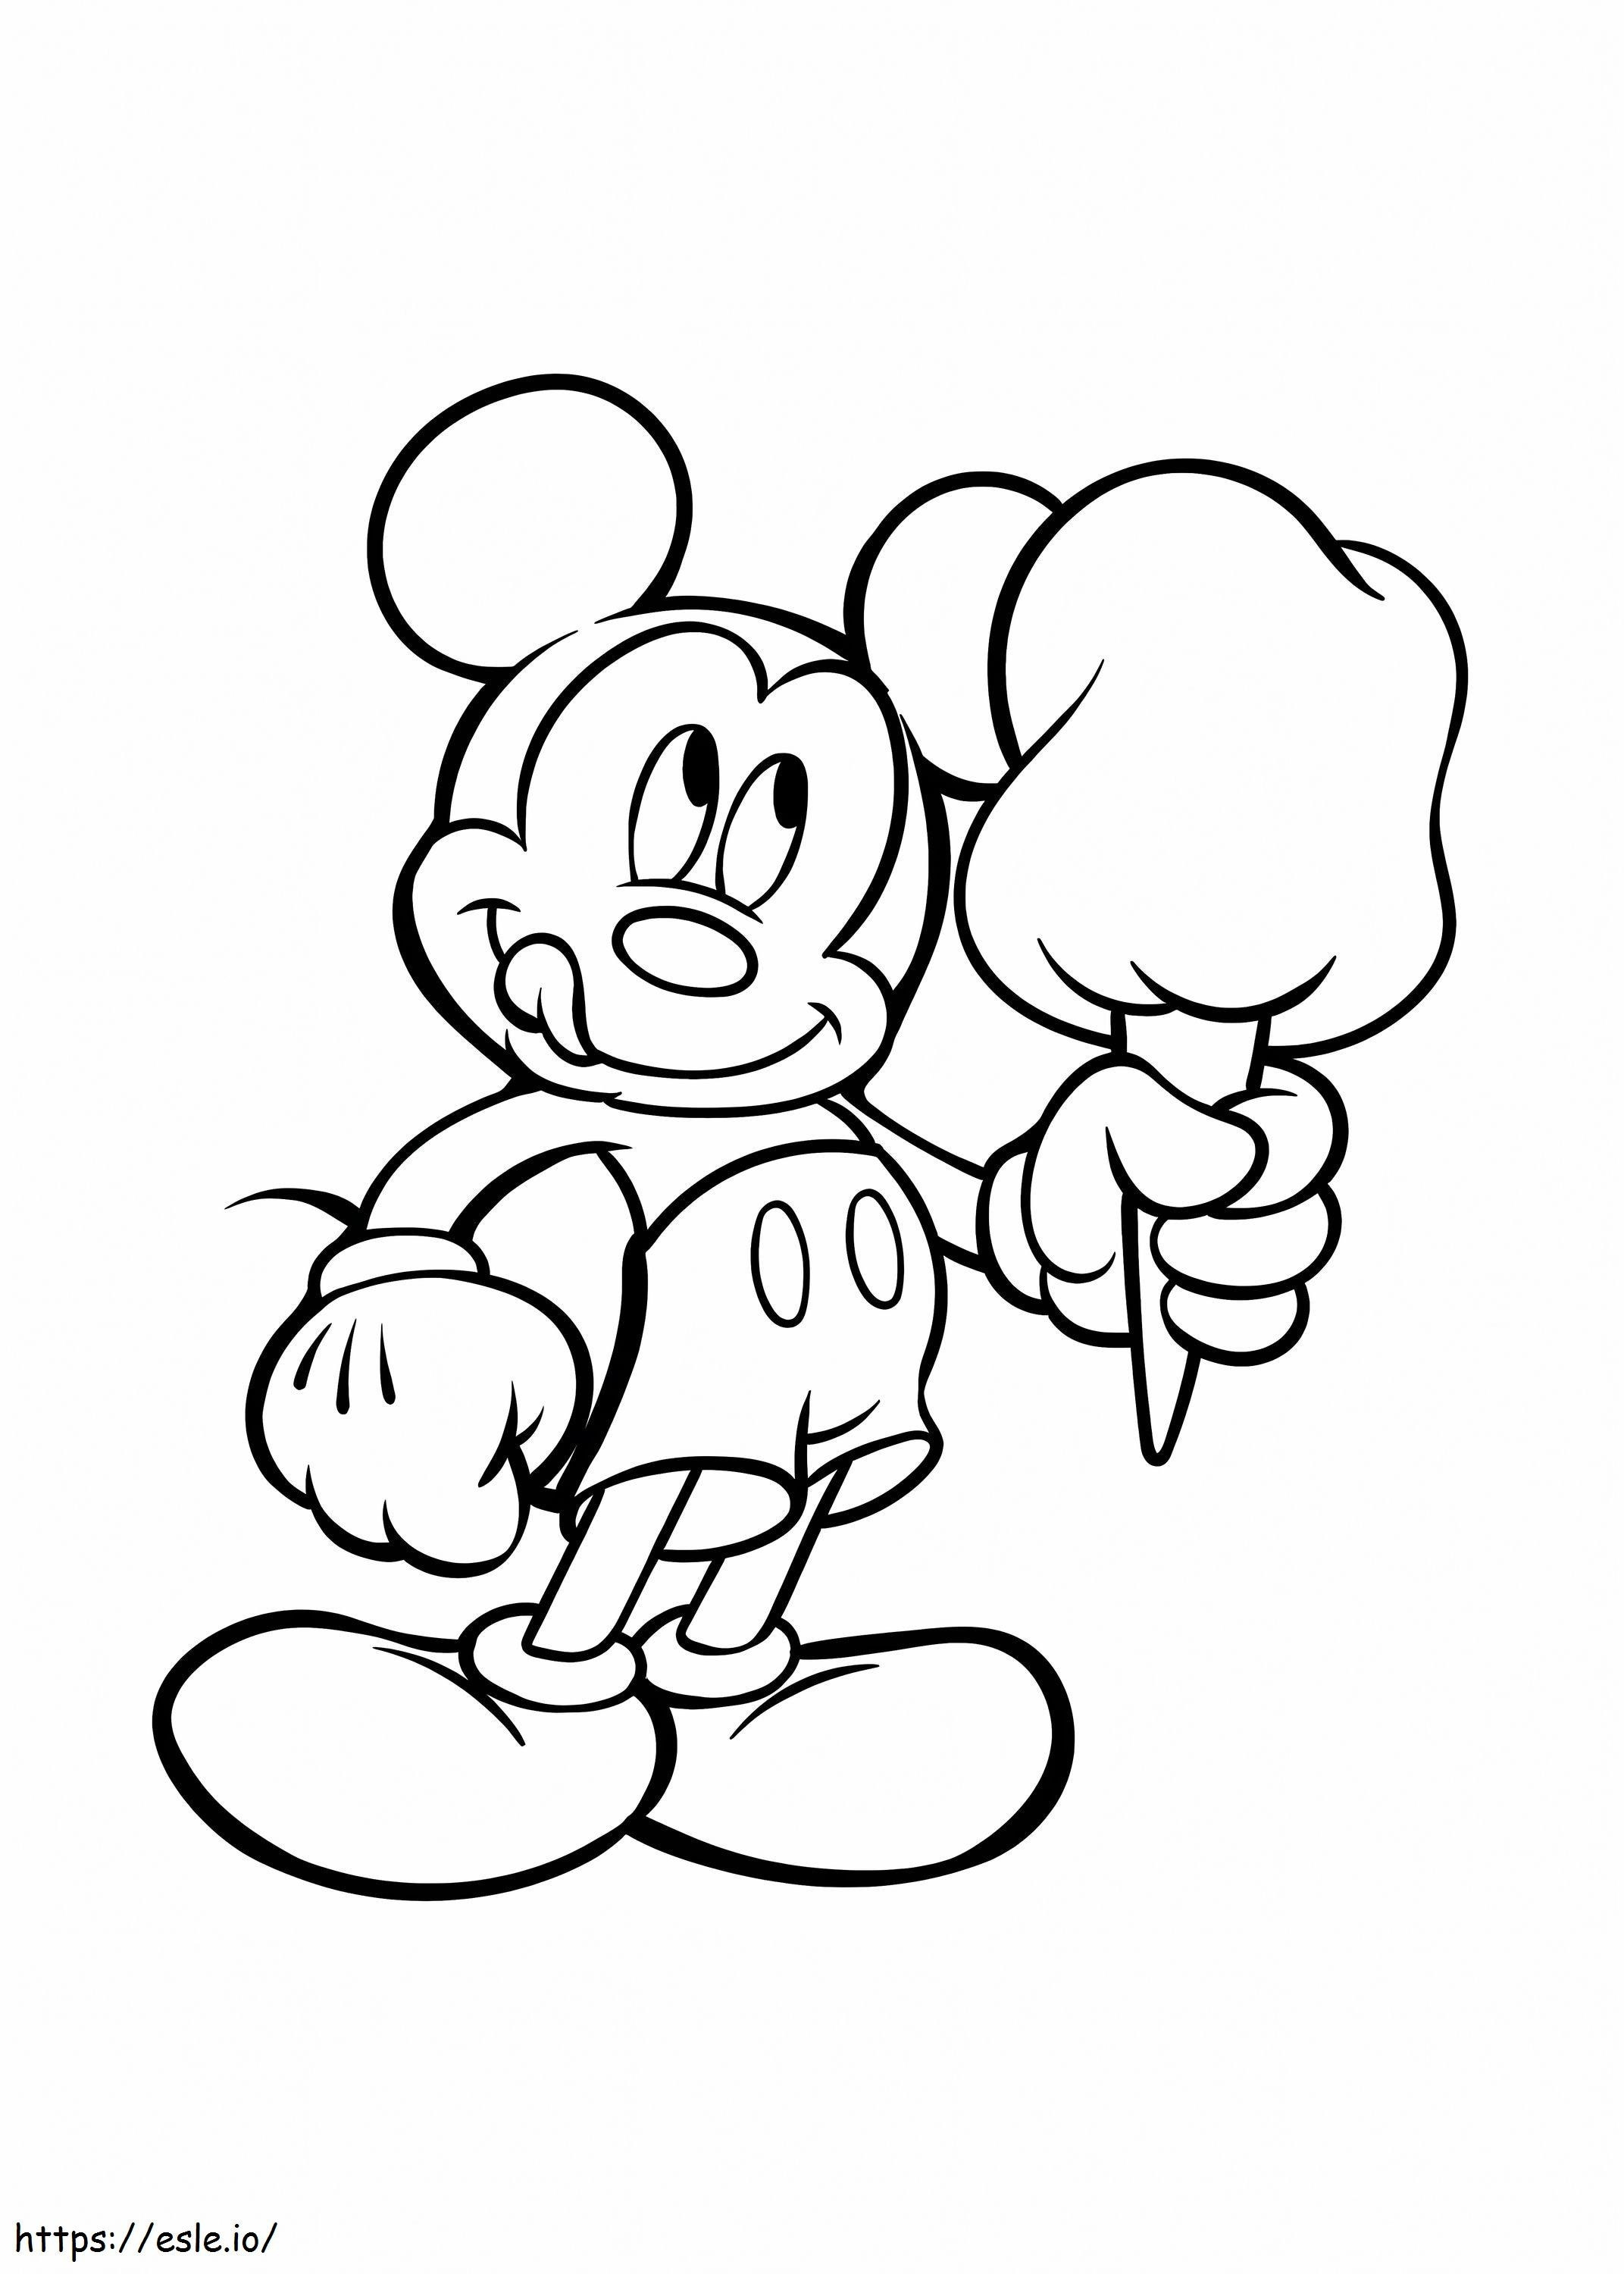 Coloriage Mickey Mouse tenant une glace à imprimer dessin